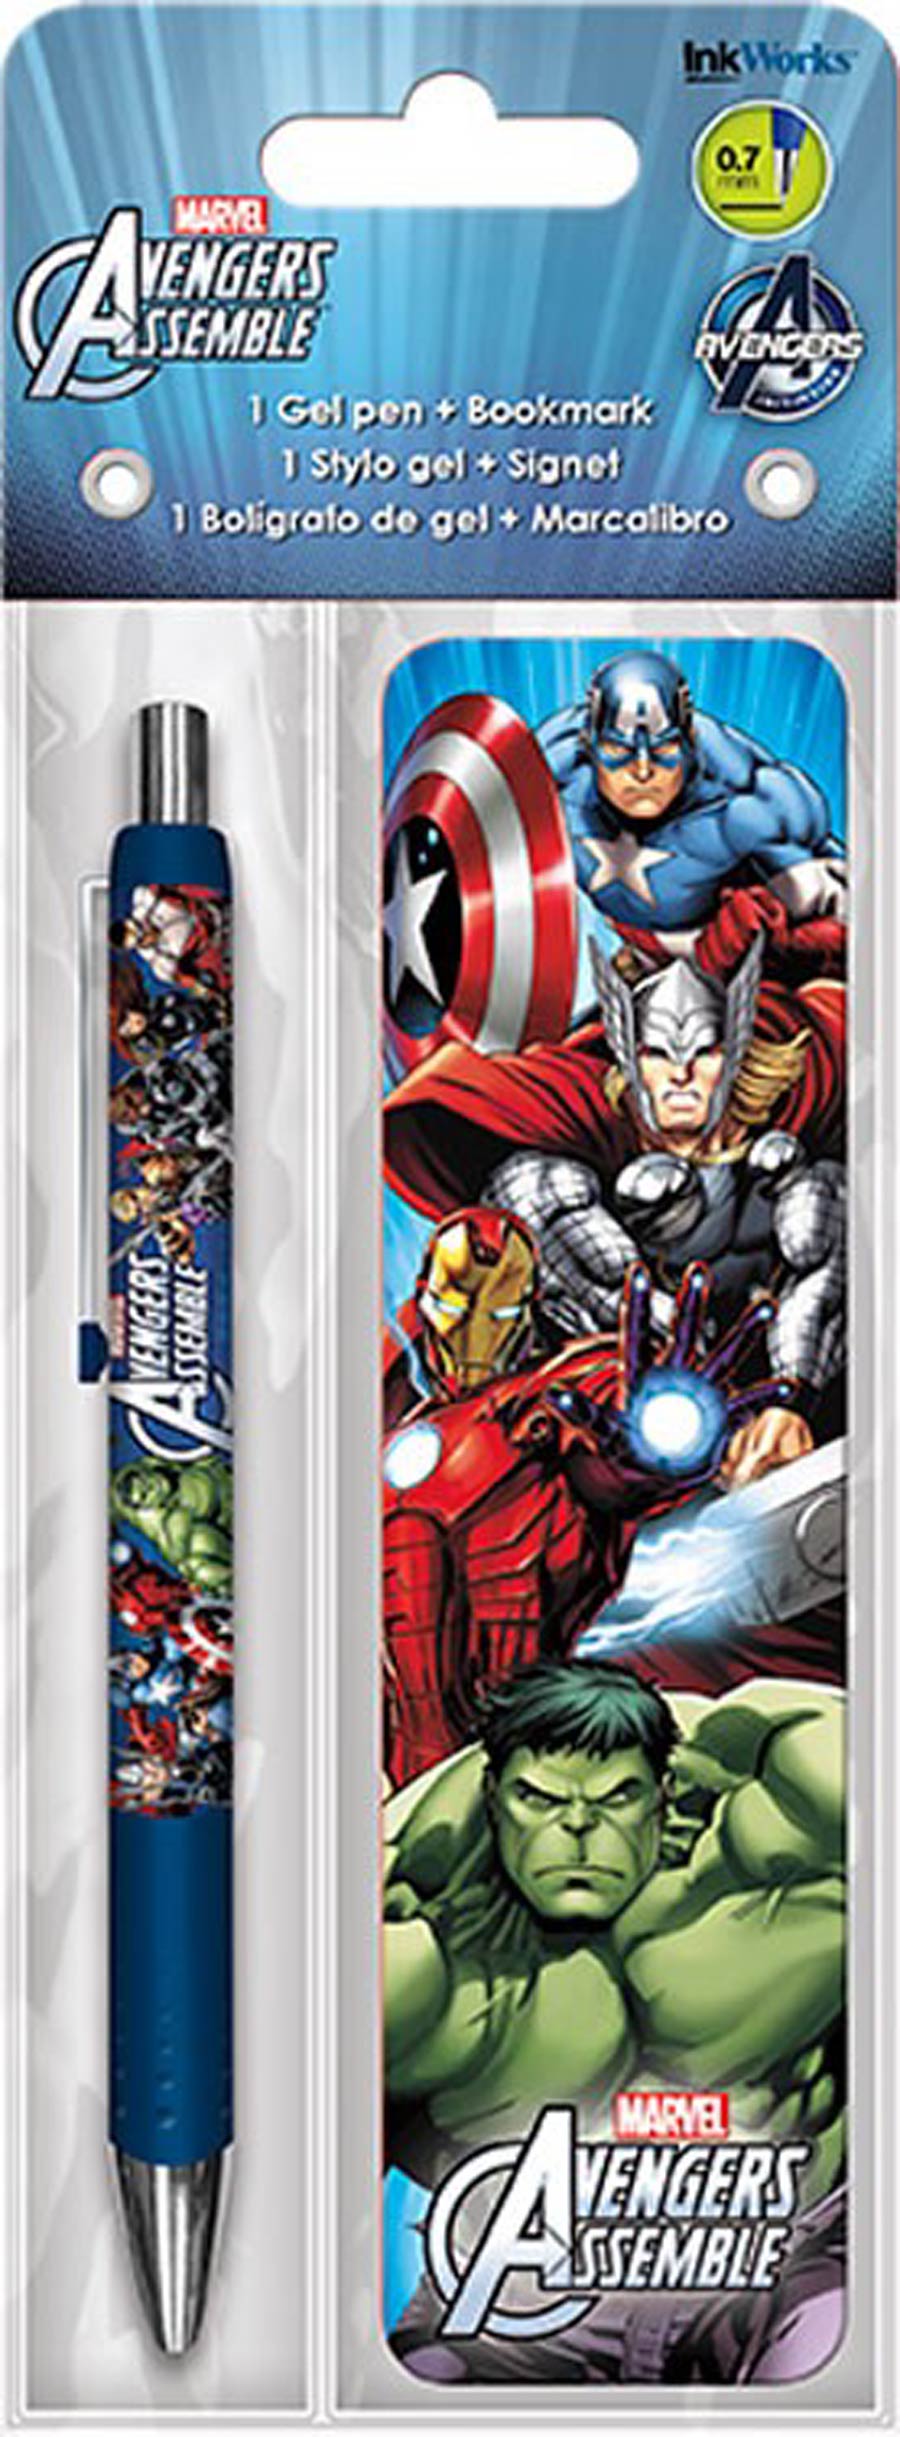 Avengers Assemble Gel Pen And Bookmark